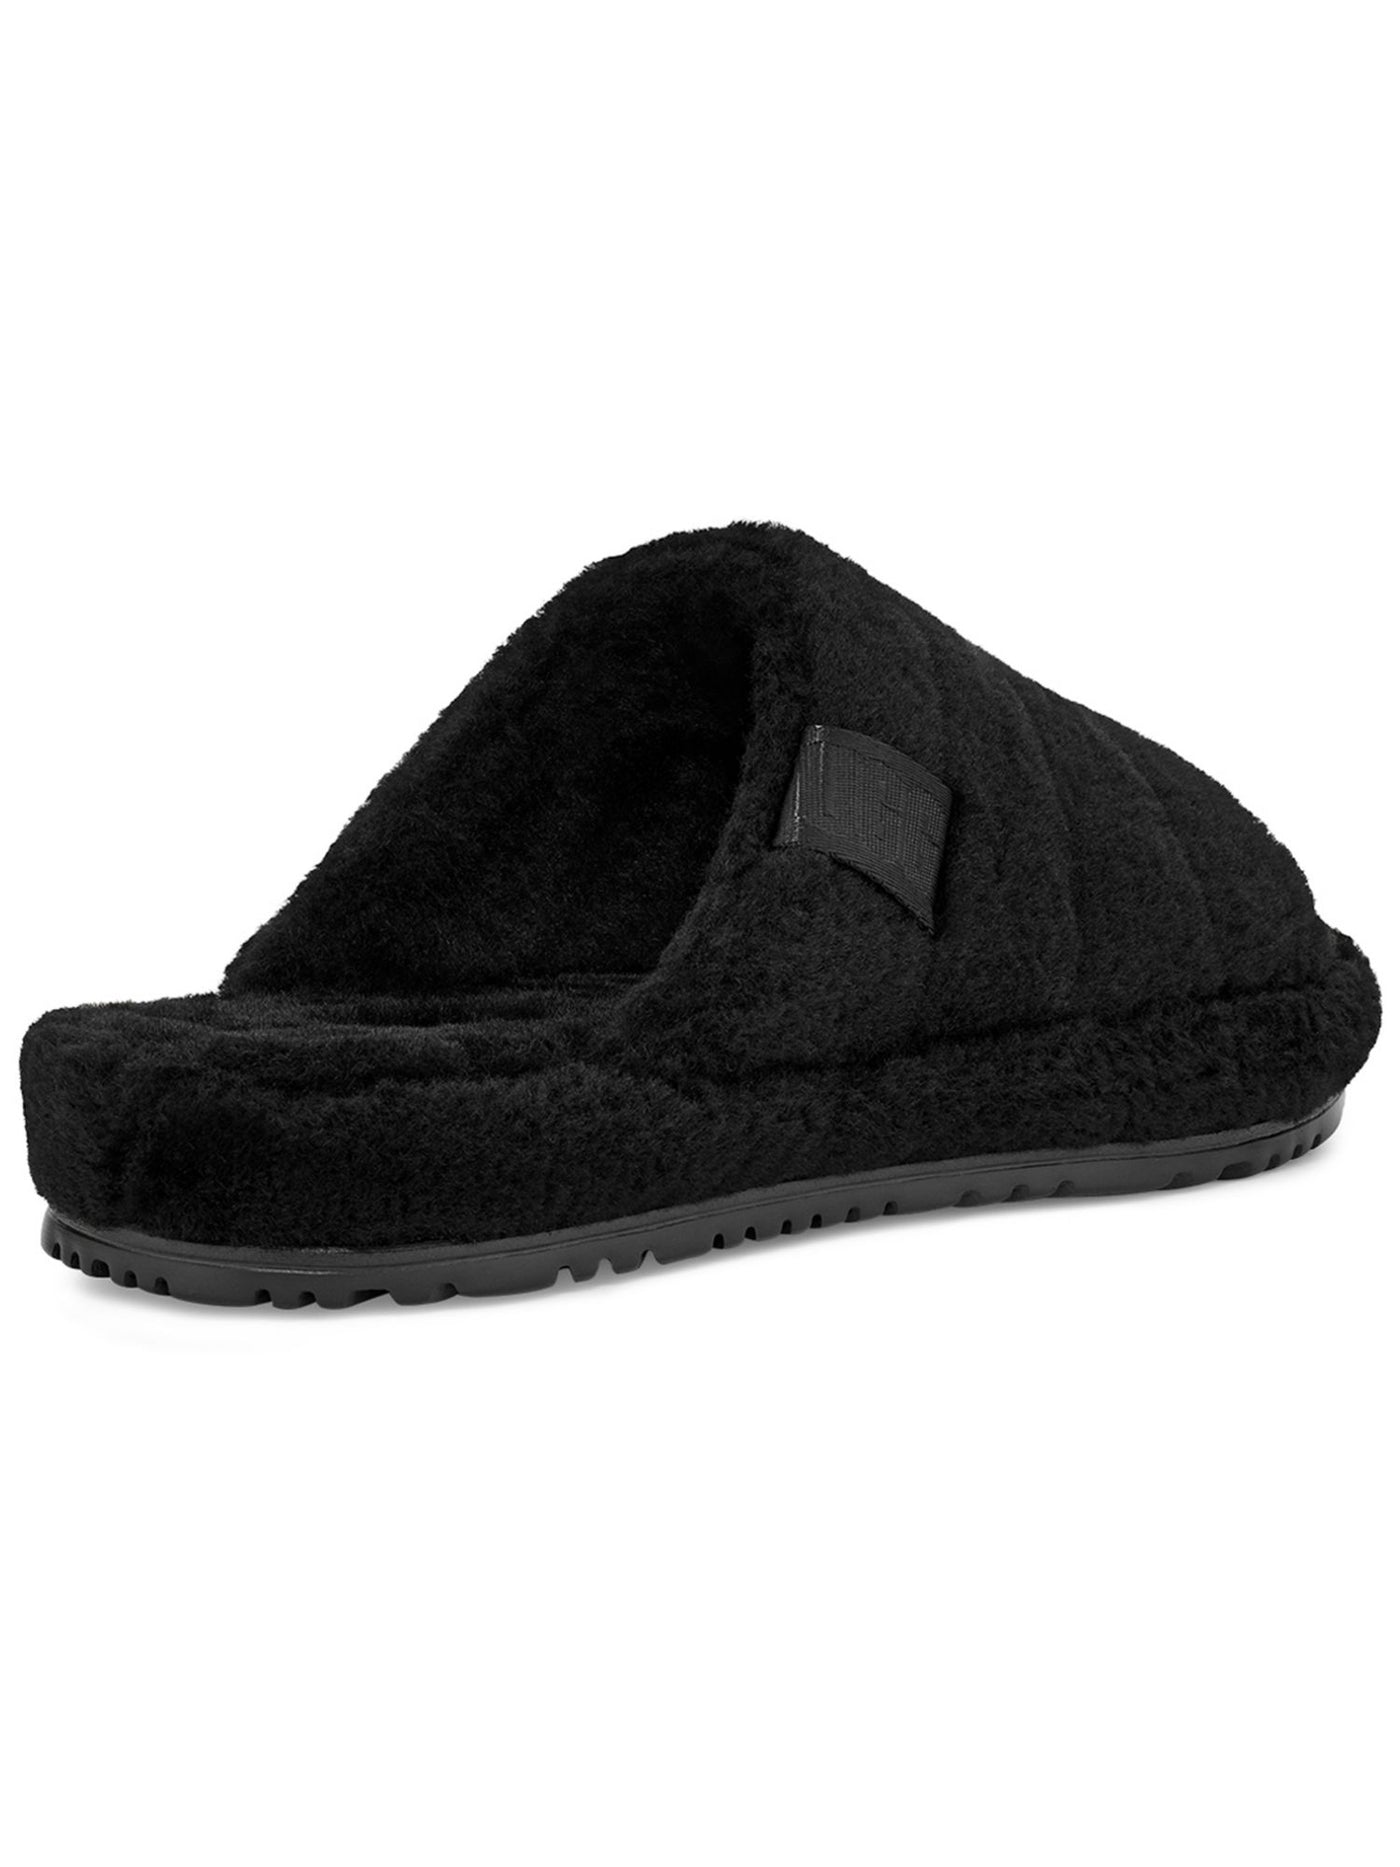 UGG Womens Black Comfort Fluff You Round Toe Platform Slip On Slippers Shoes 7